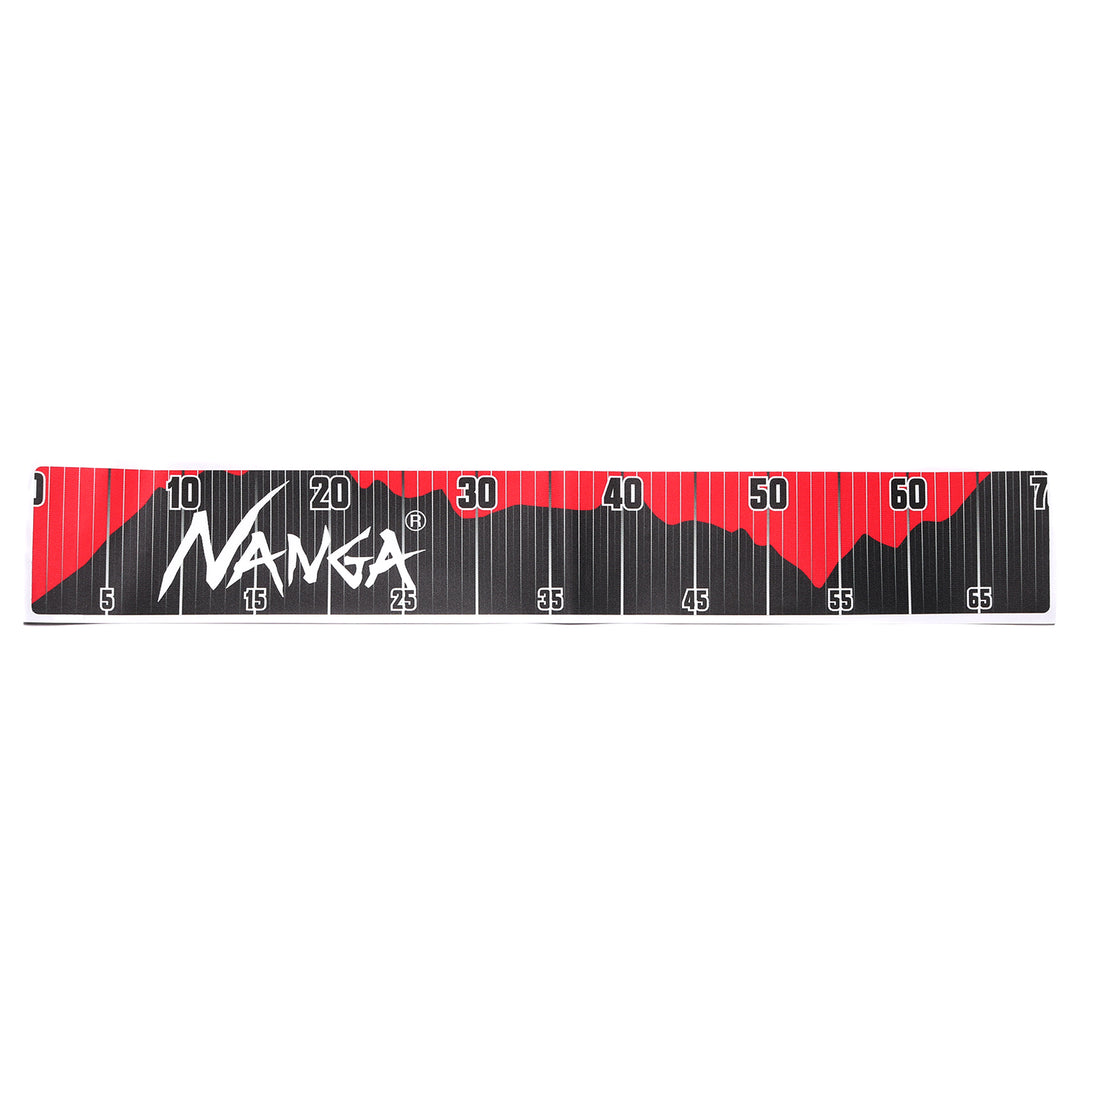 NANGA DECK MEASURE STICKER/ナンガ デッキメジャーステッカー (7539267862702)